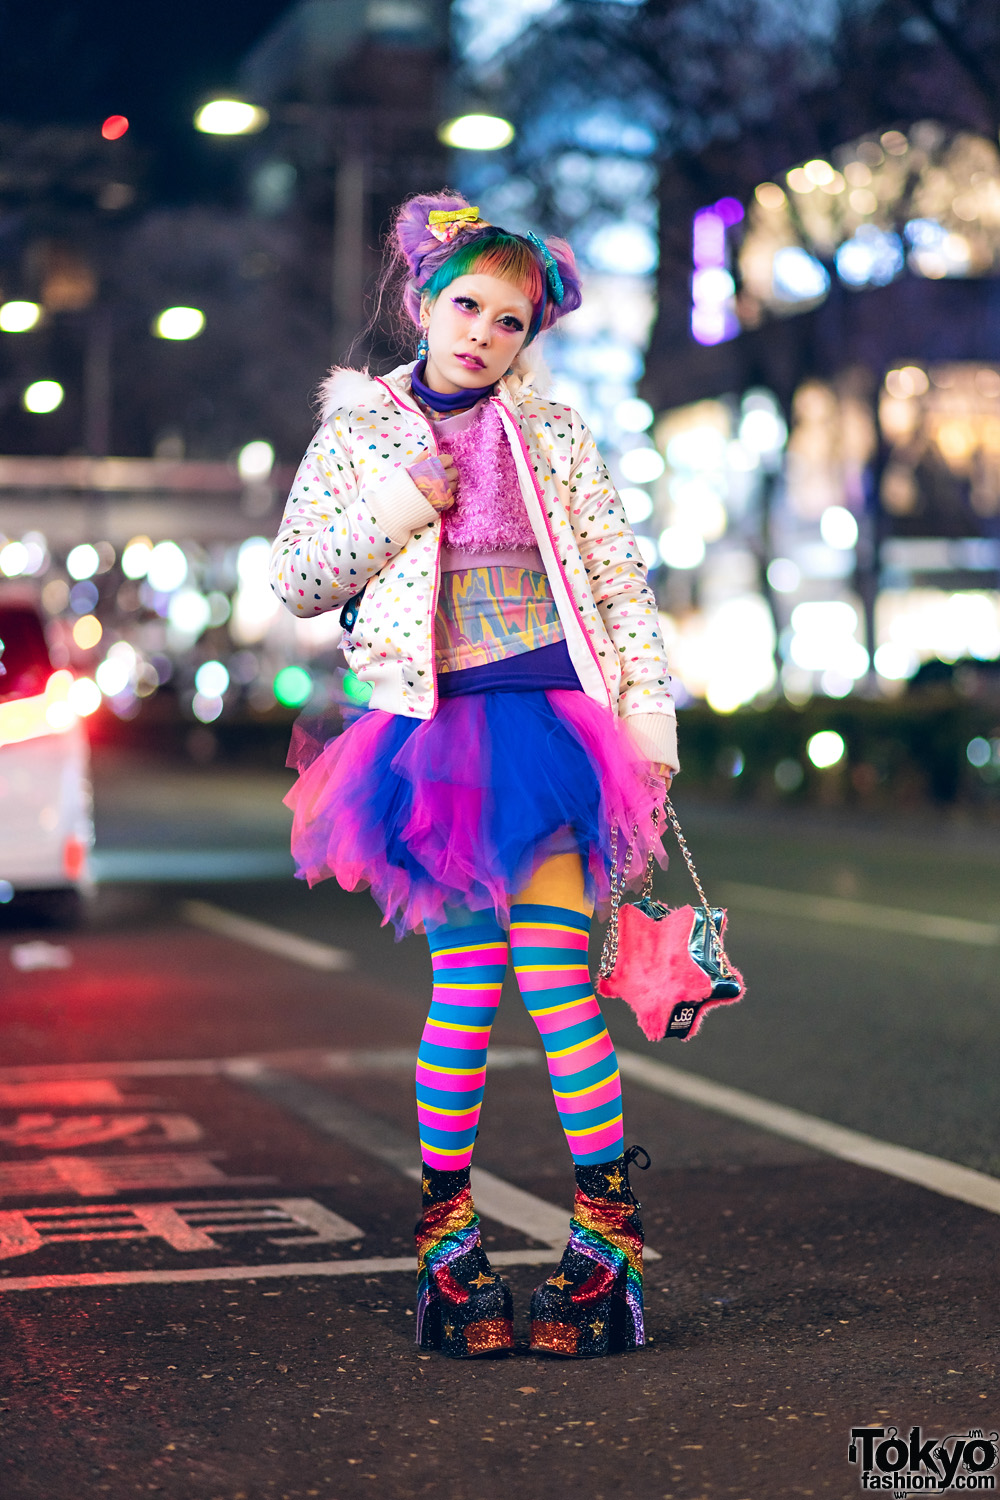 6%DokiDoki Staffer's Layered Kawaii Fashion w/ Unicorn Hair, Heart Print Jacket, Tulle Skirt, Dolls Kill Platform Glitter Boots, Care Bears Earrings & Kiki2 Star Bag